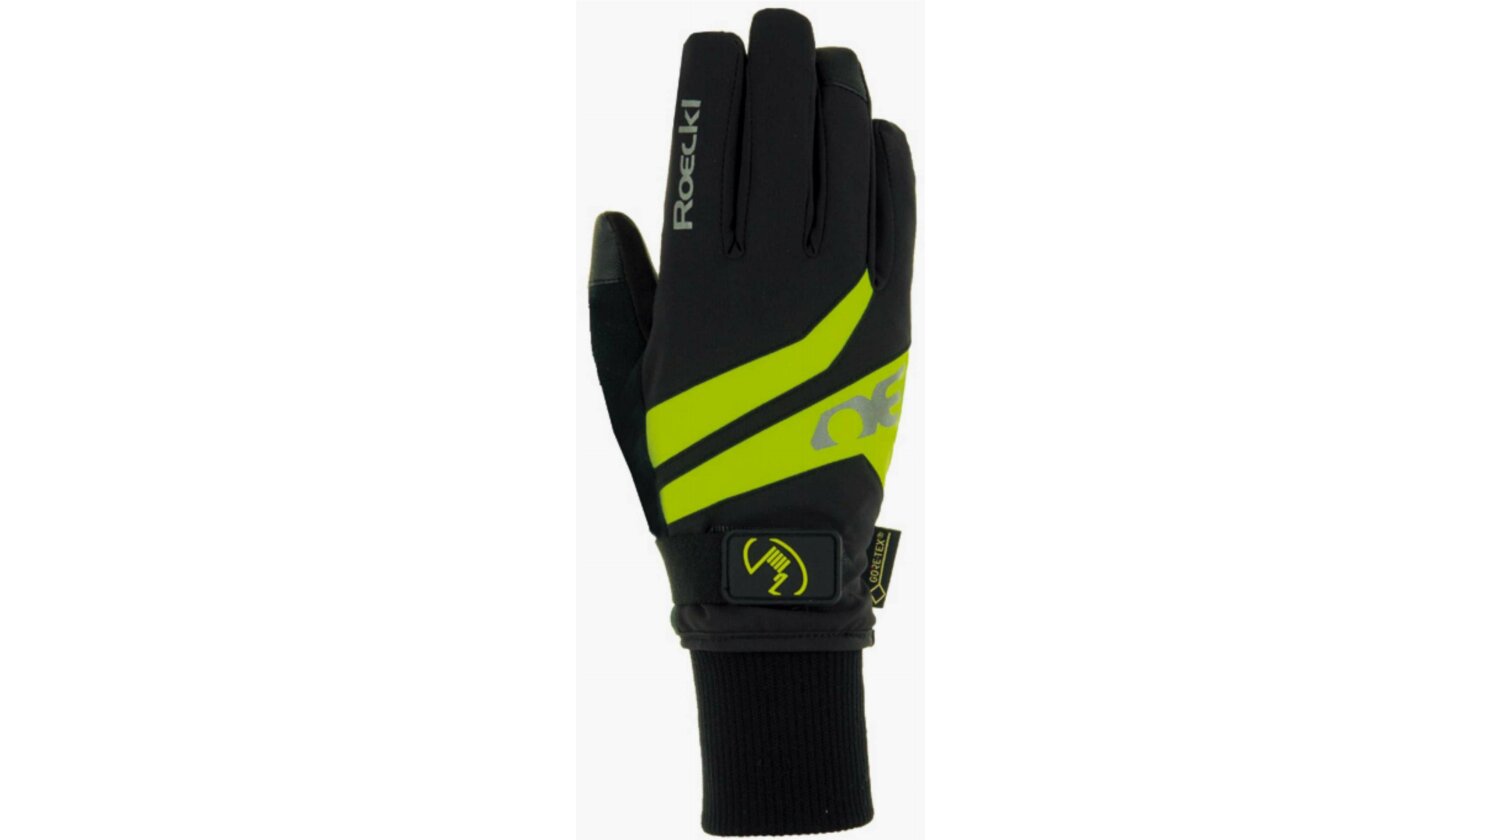 Roeckl Rocca GTX Handschuhe lang schwarz/gelb 10